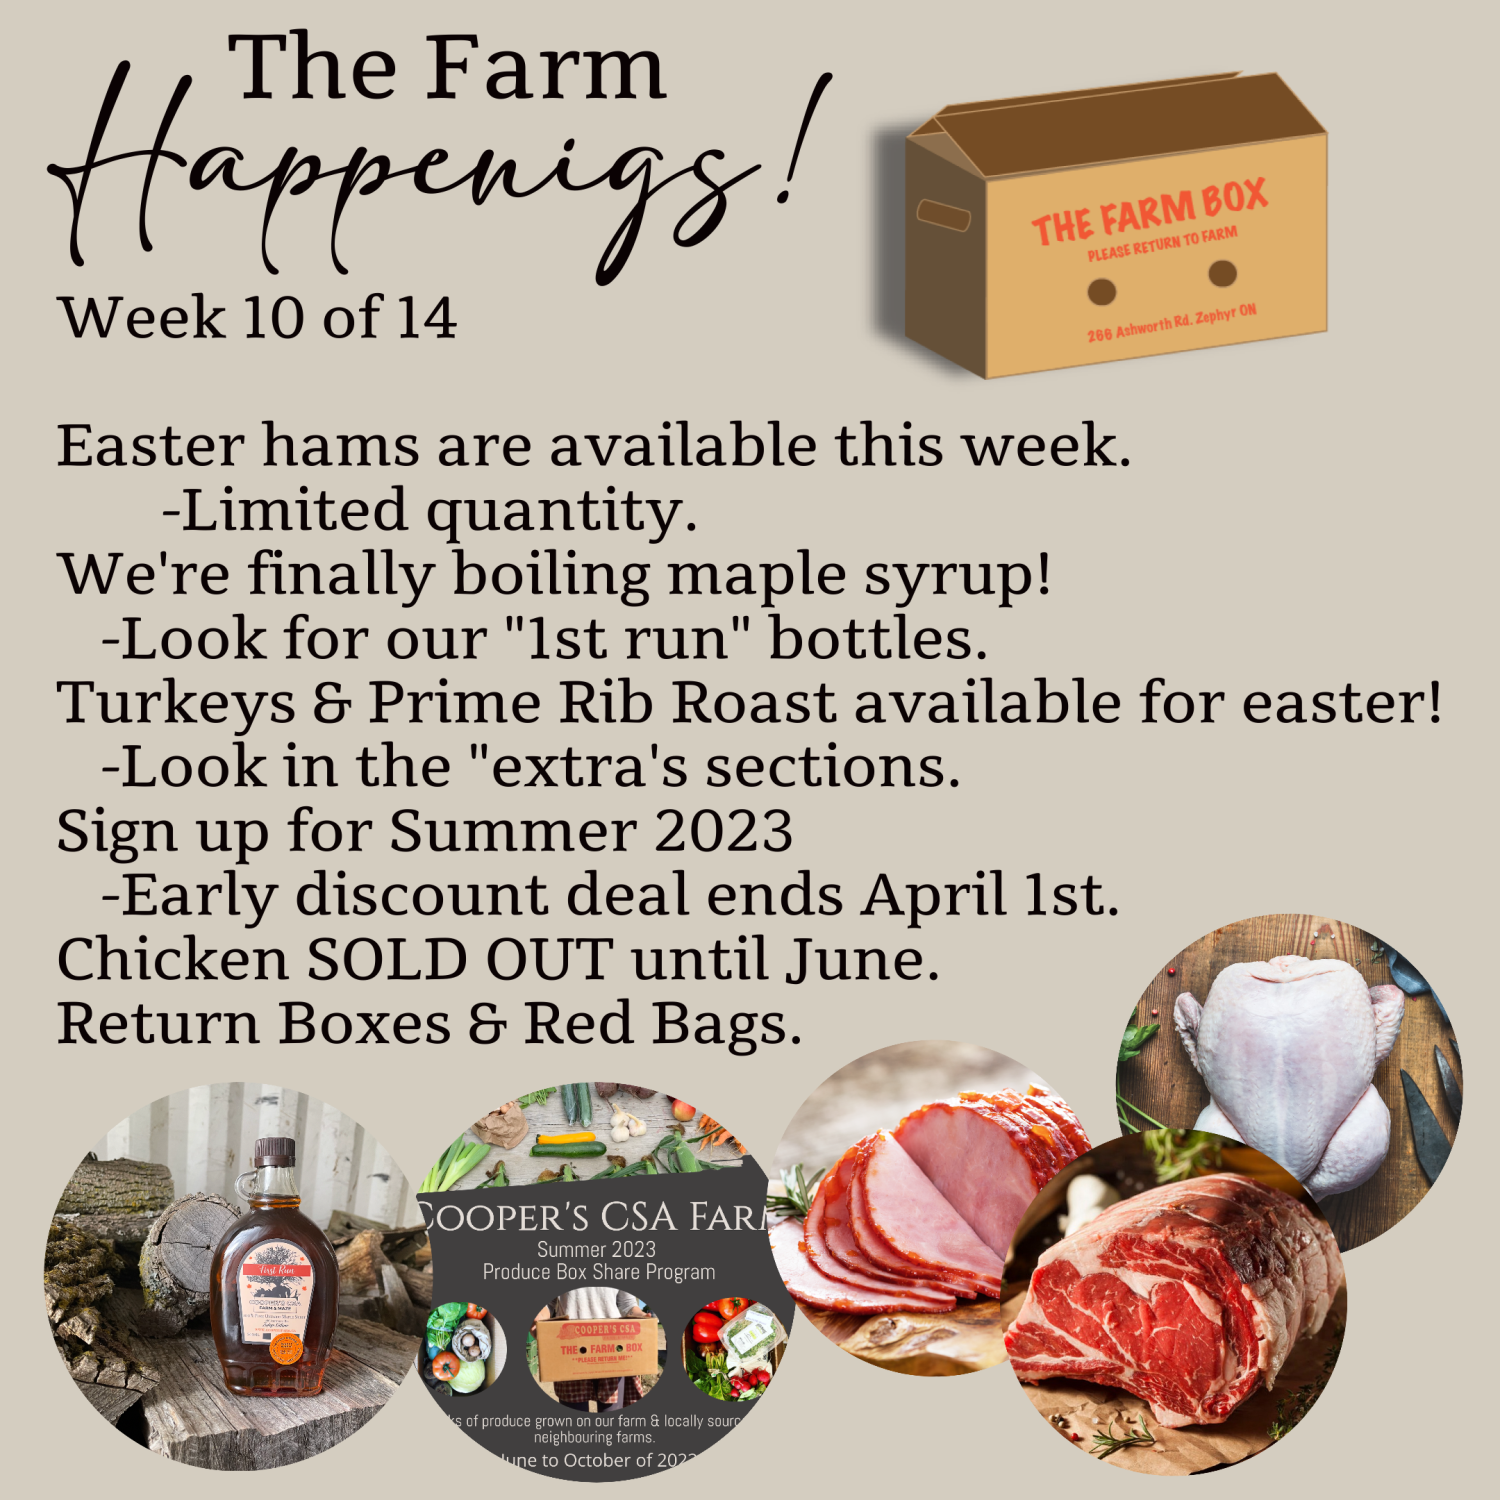 Previous Happening: "The Farm Box"-Coopers CSA Farm Farm Happenings Week 10